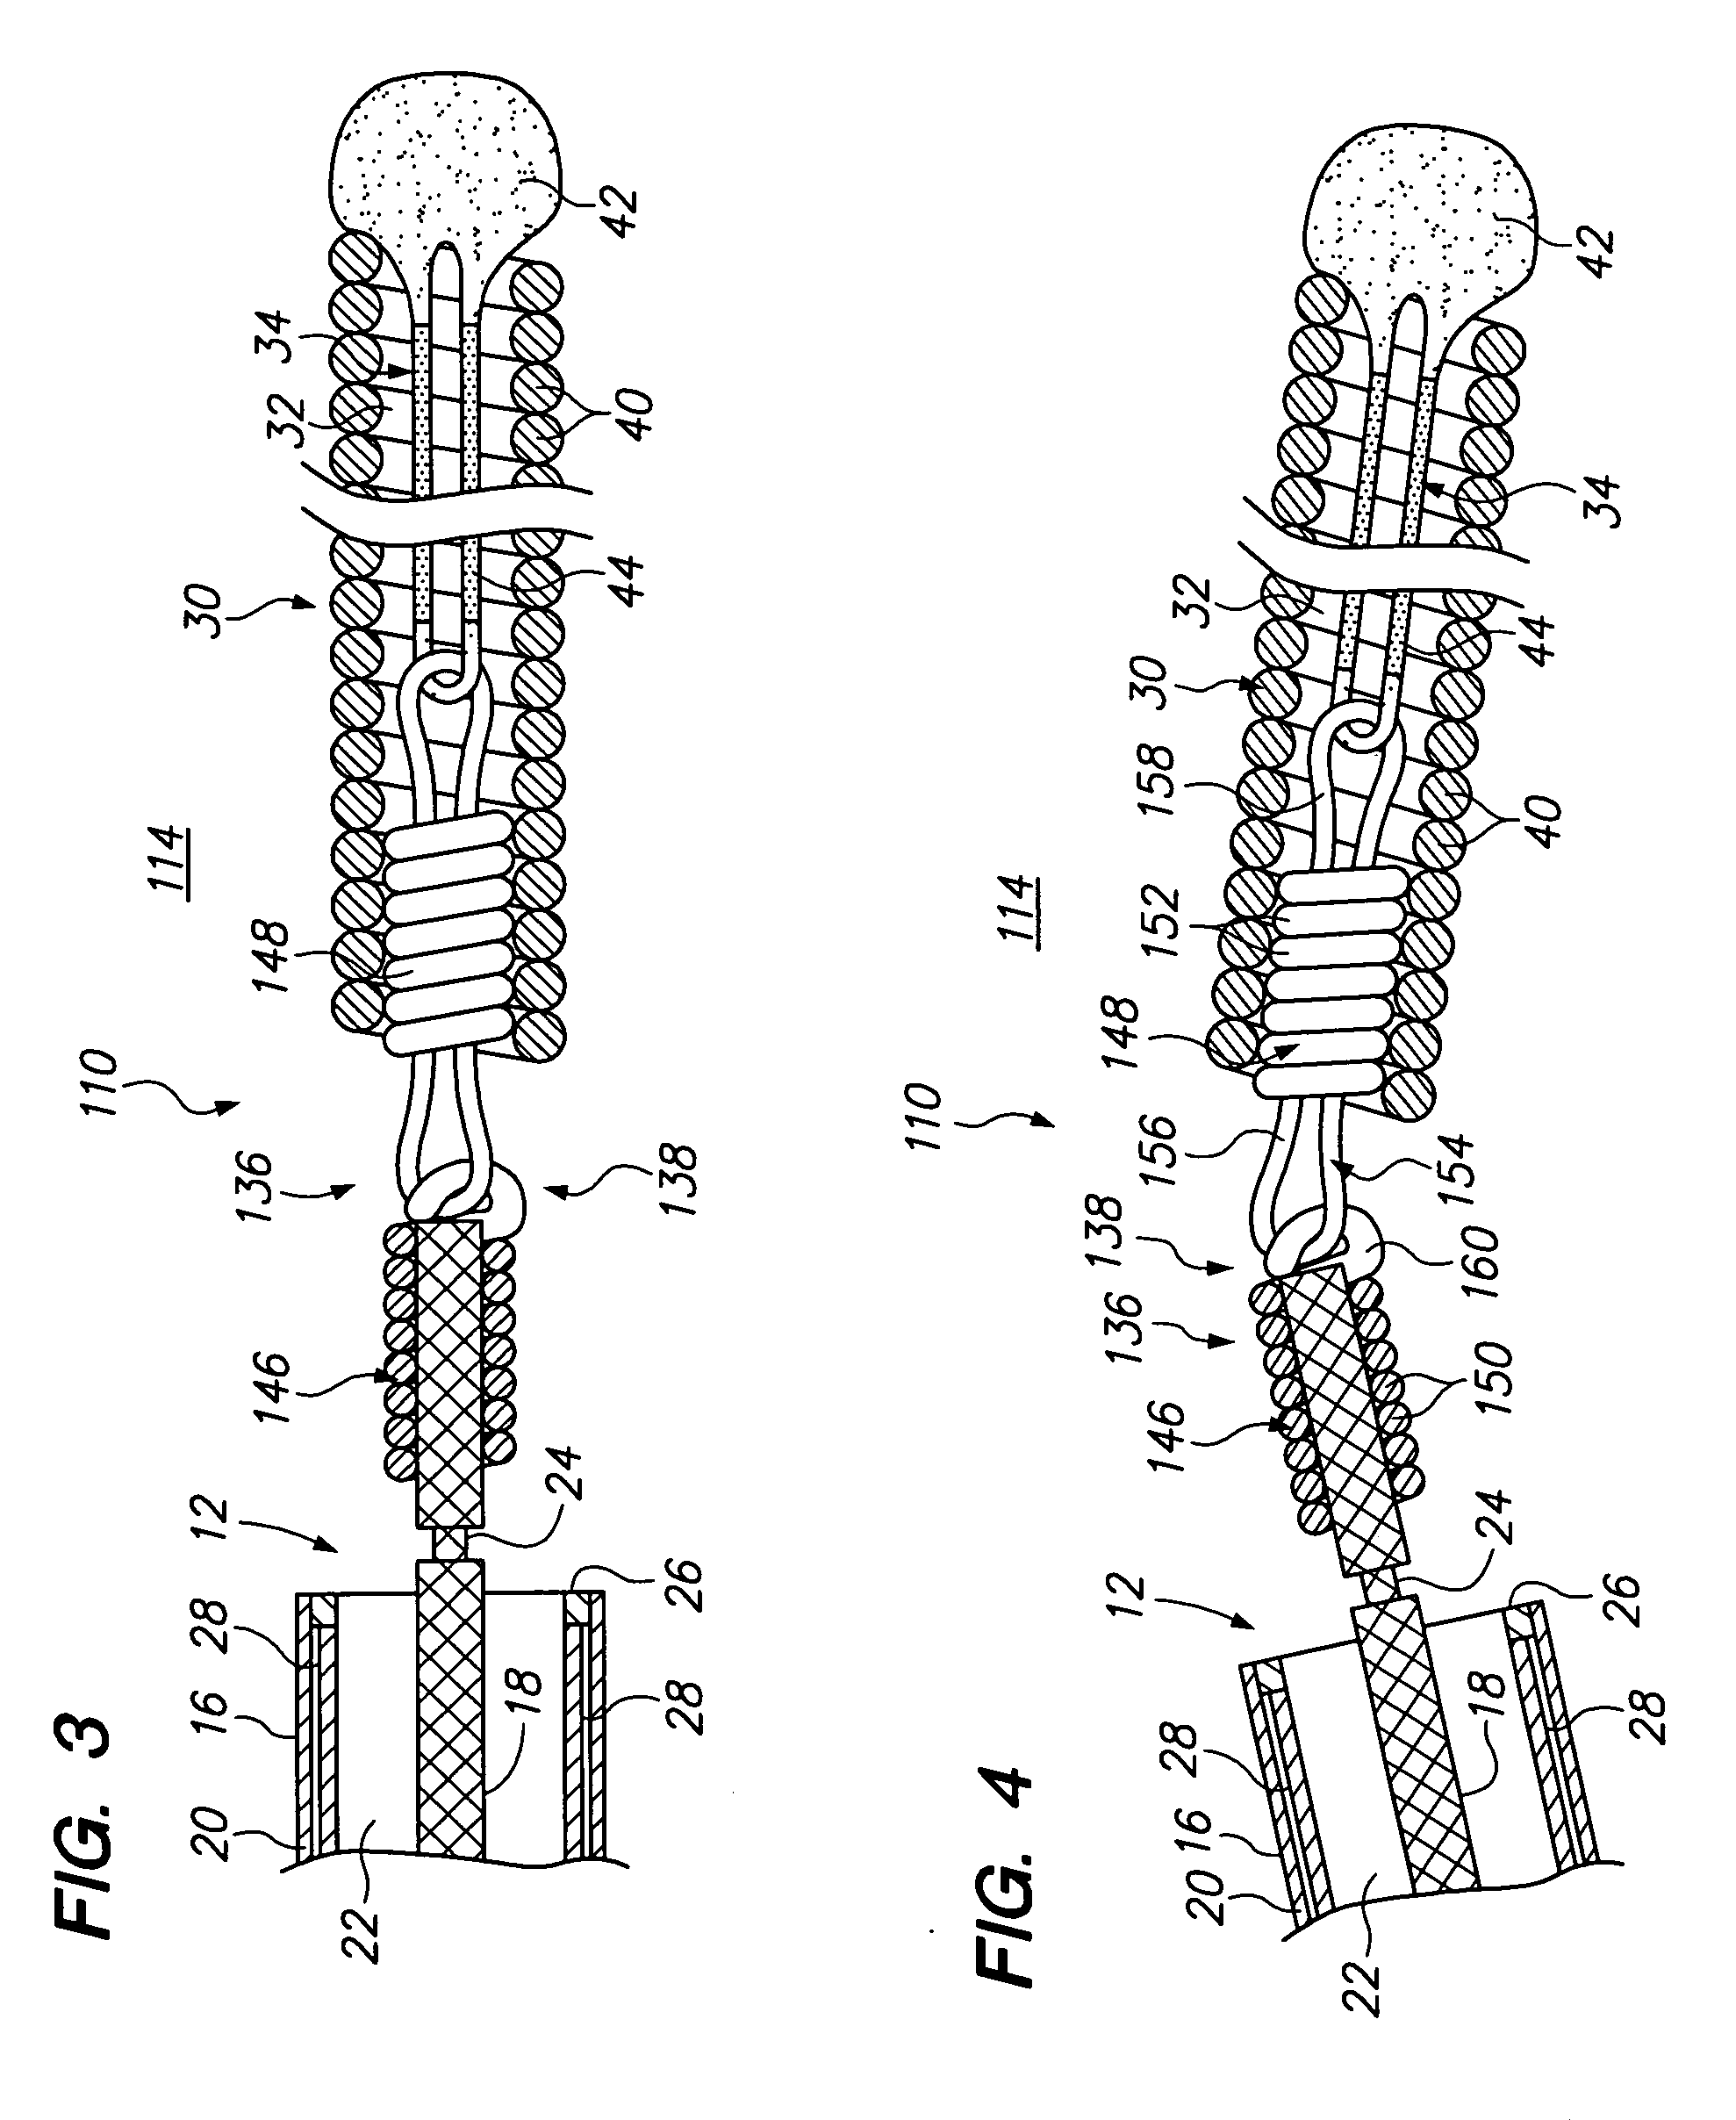 Vaso-occlusive device having pivotable coupling